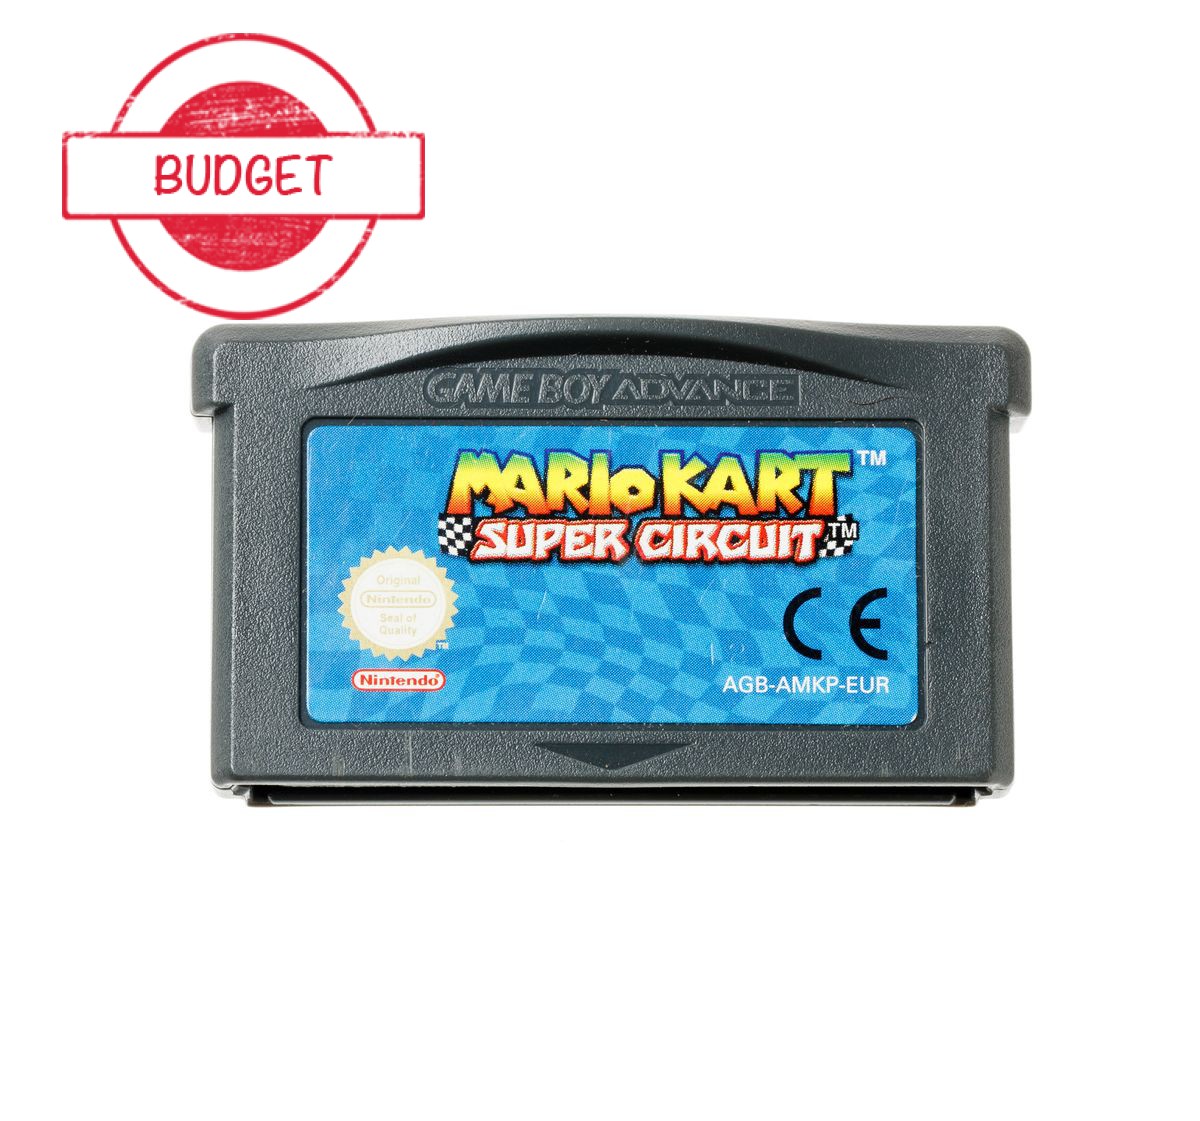 Mario Kart Super Circuit - Budget - Gameboy Advance Games